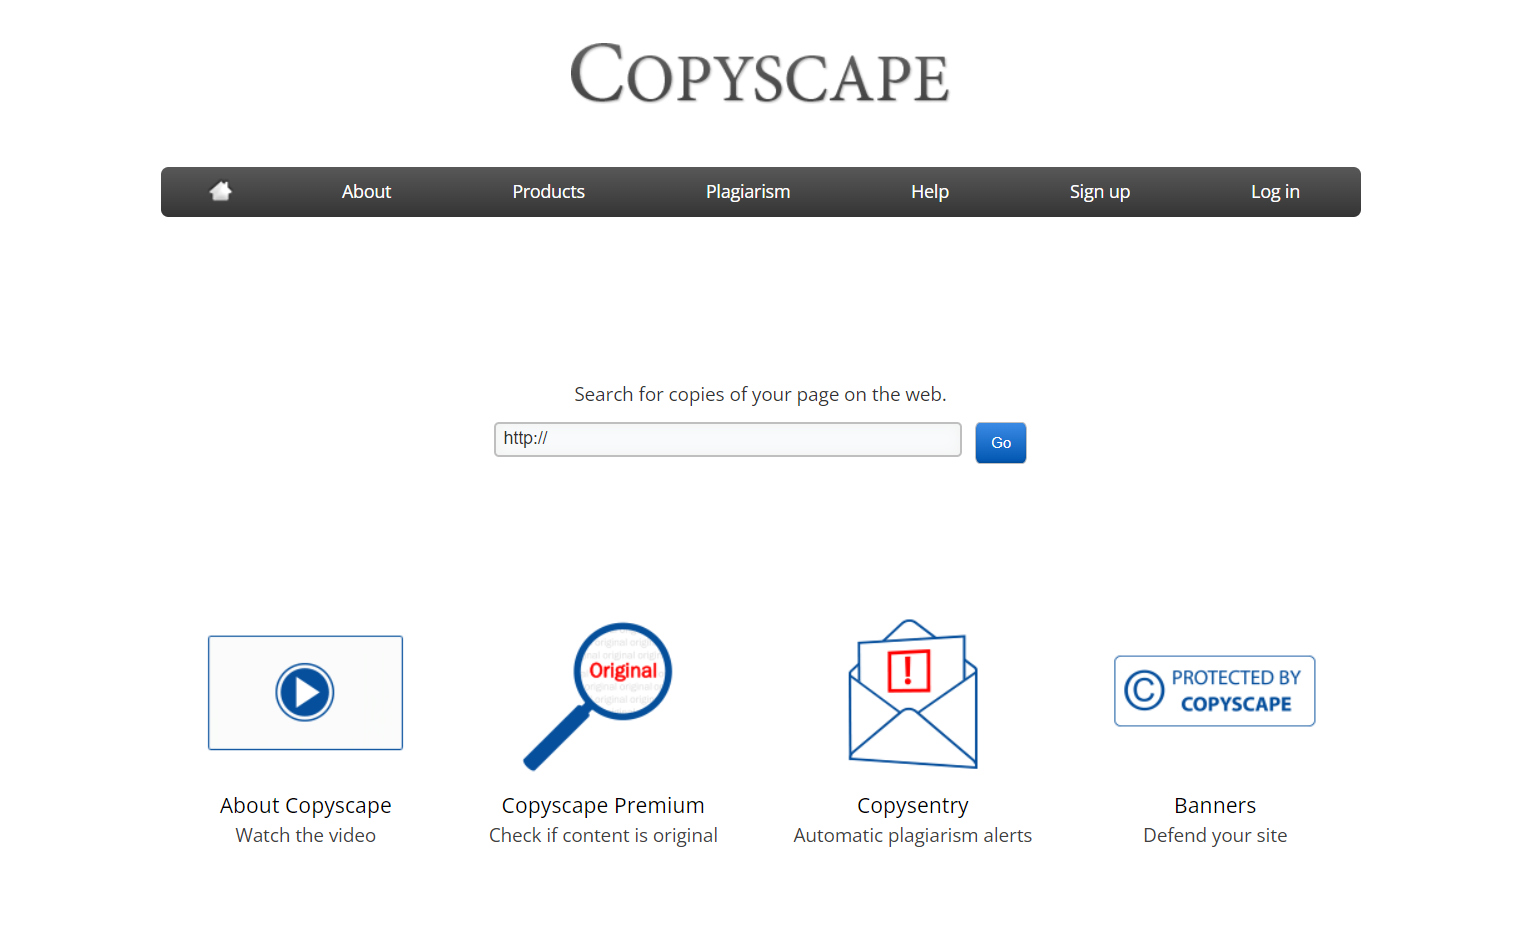 Copyscape: Make Sure You Don't Have Plagiarized Content